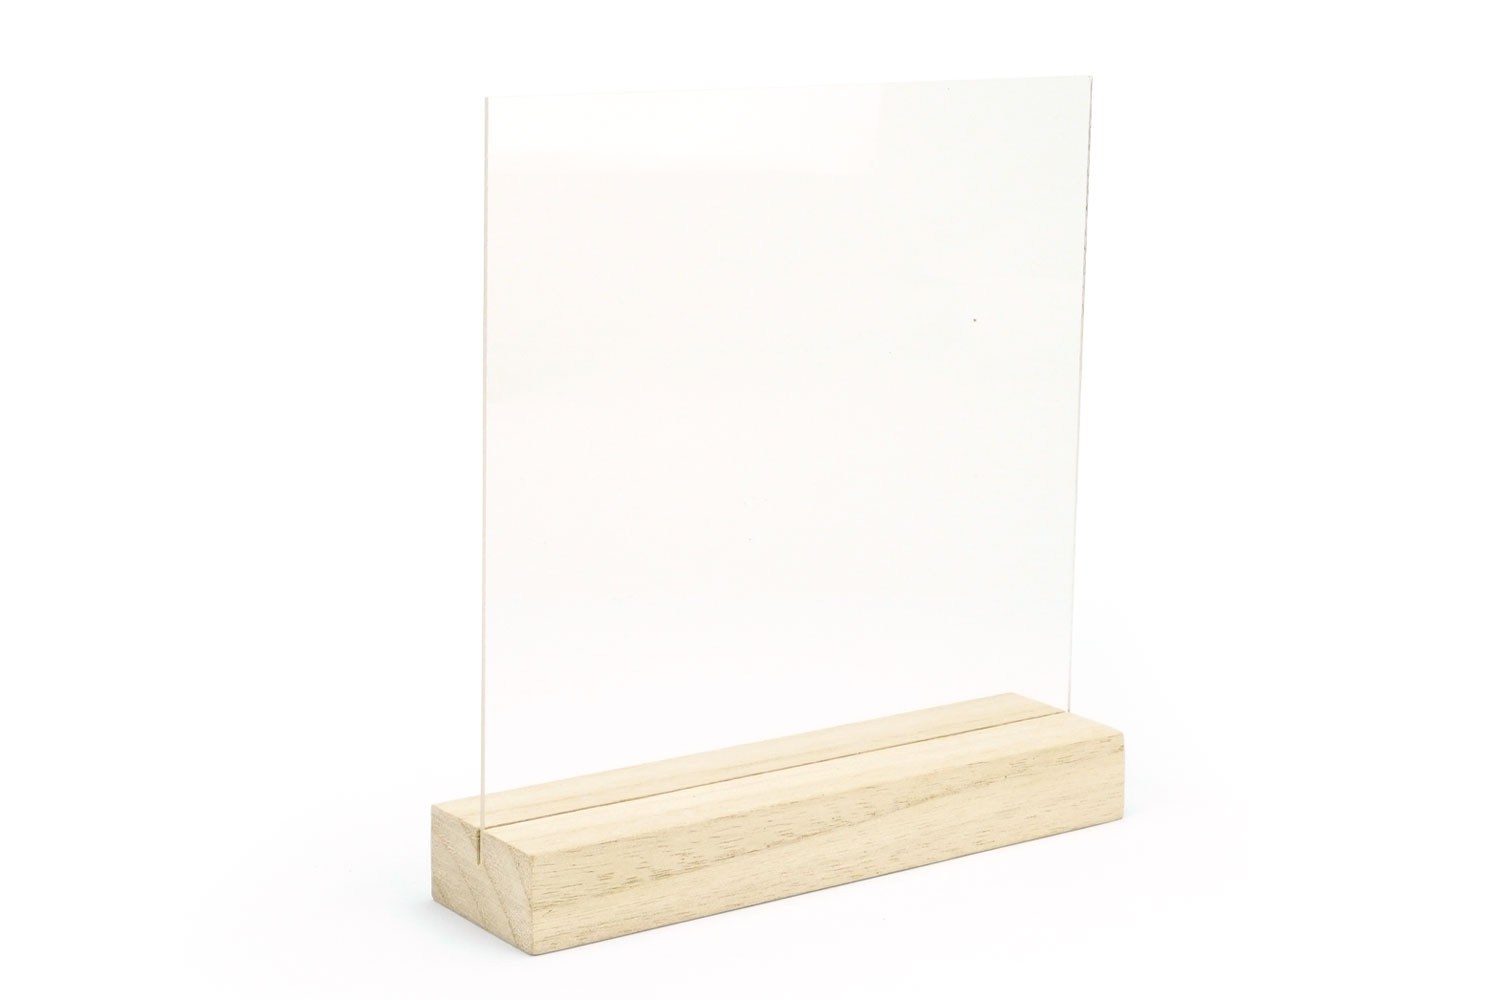 Cadre empreinte plaque plexiglas - 15 cm - Cadres photos en bois